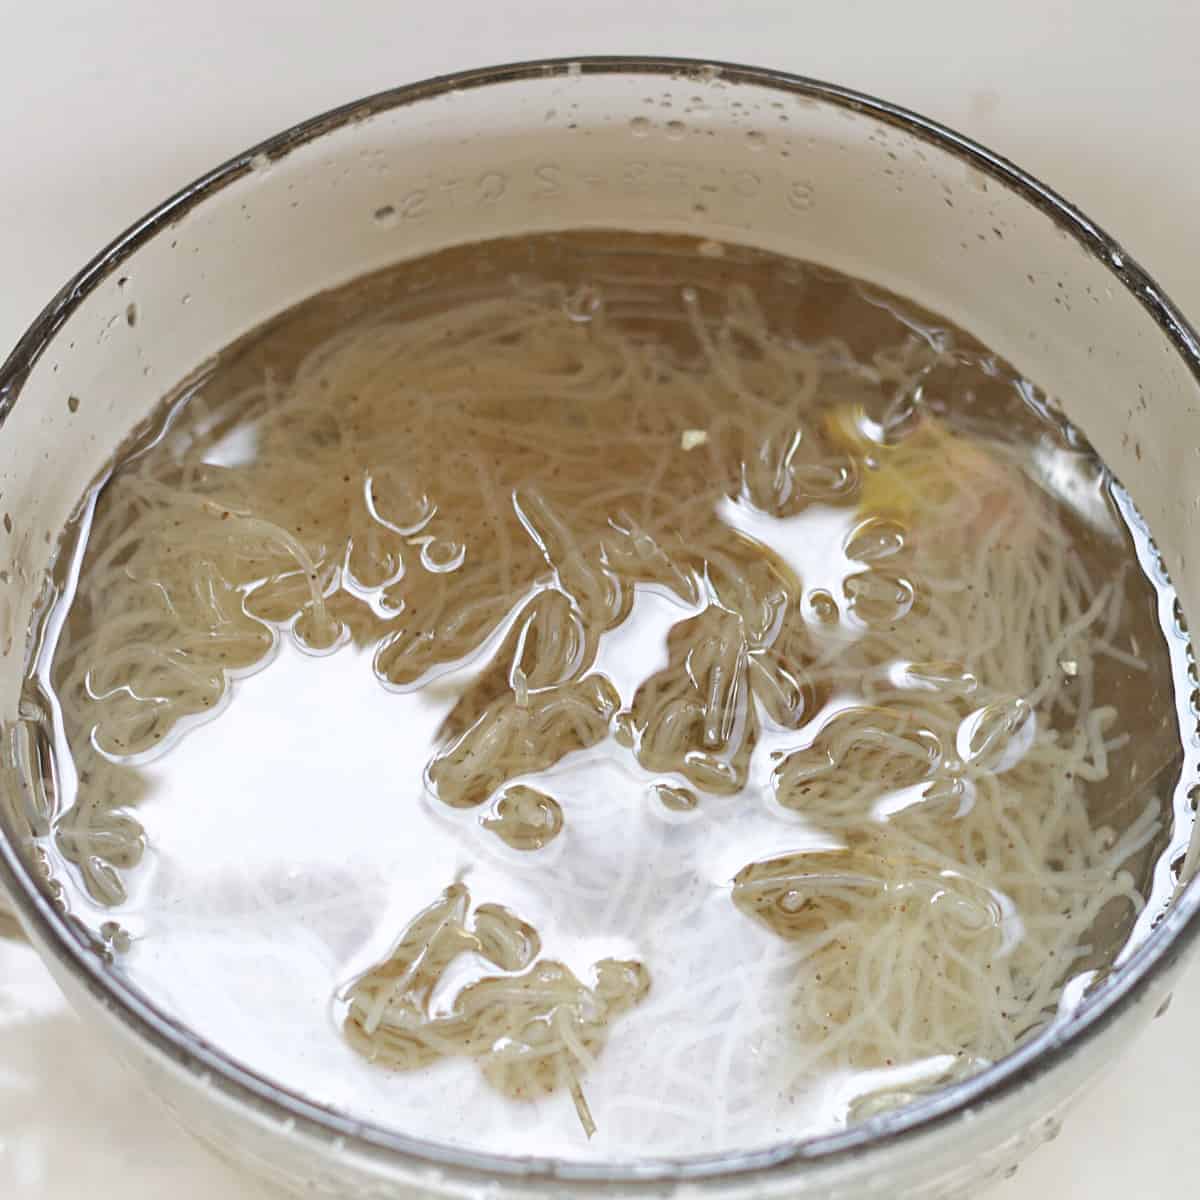 soaking the kelp noodles in water.